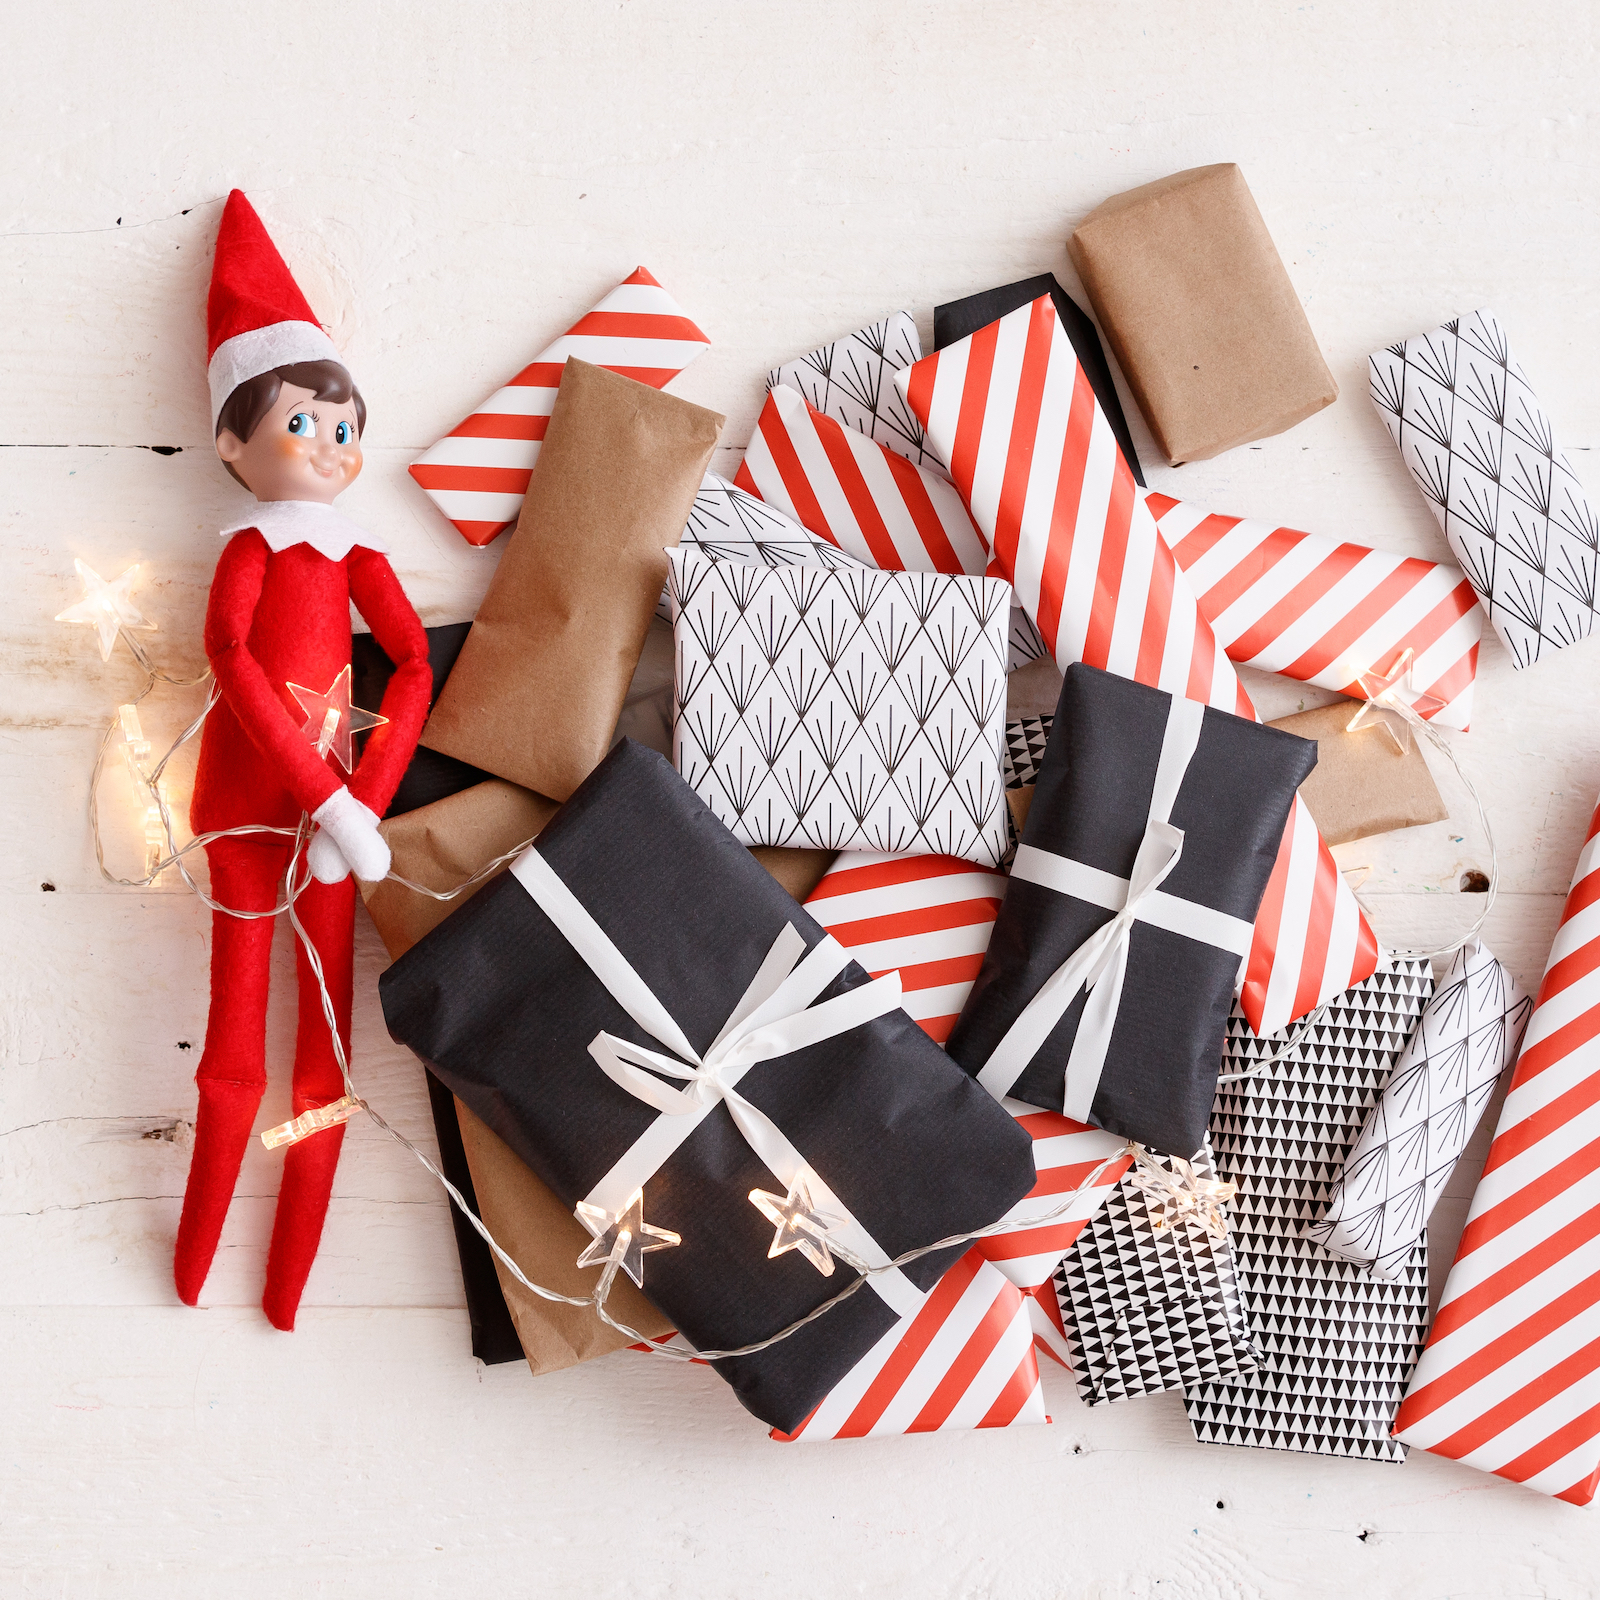 Elf Names - elf on the shelf name ideas - Christmas and holiday inspiration